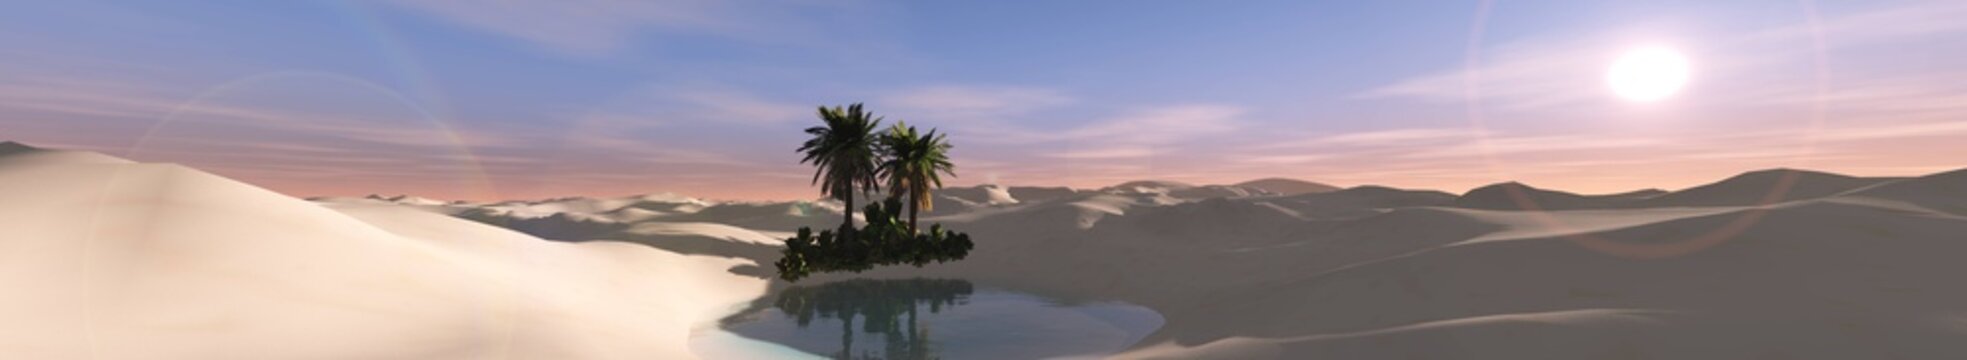 oasis at sunset in the sandy desert,
3D rendering
